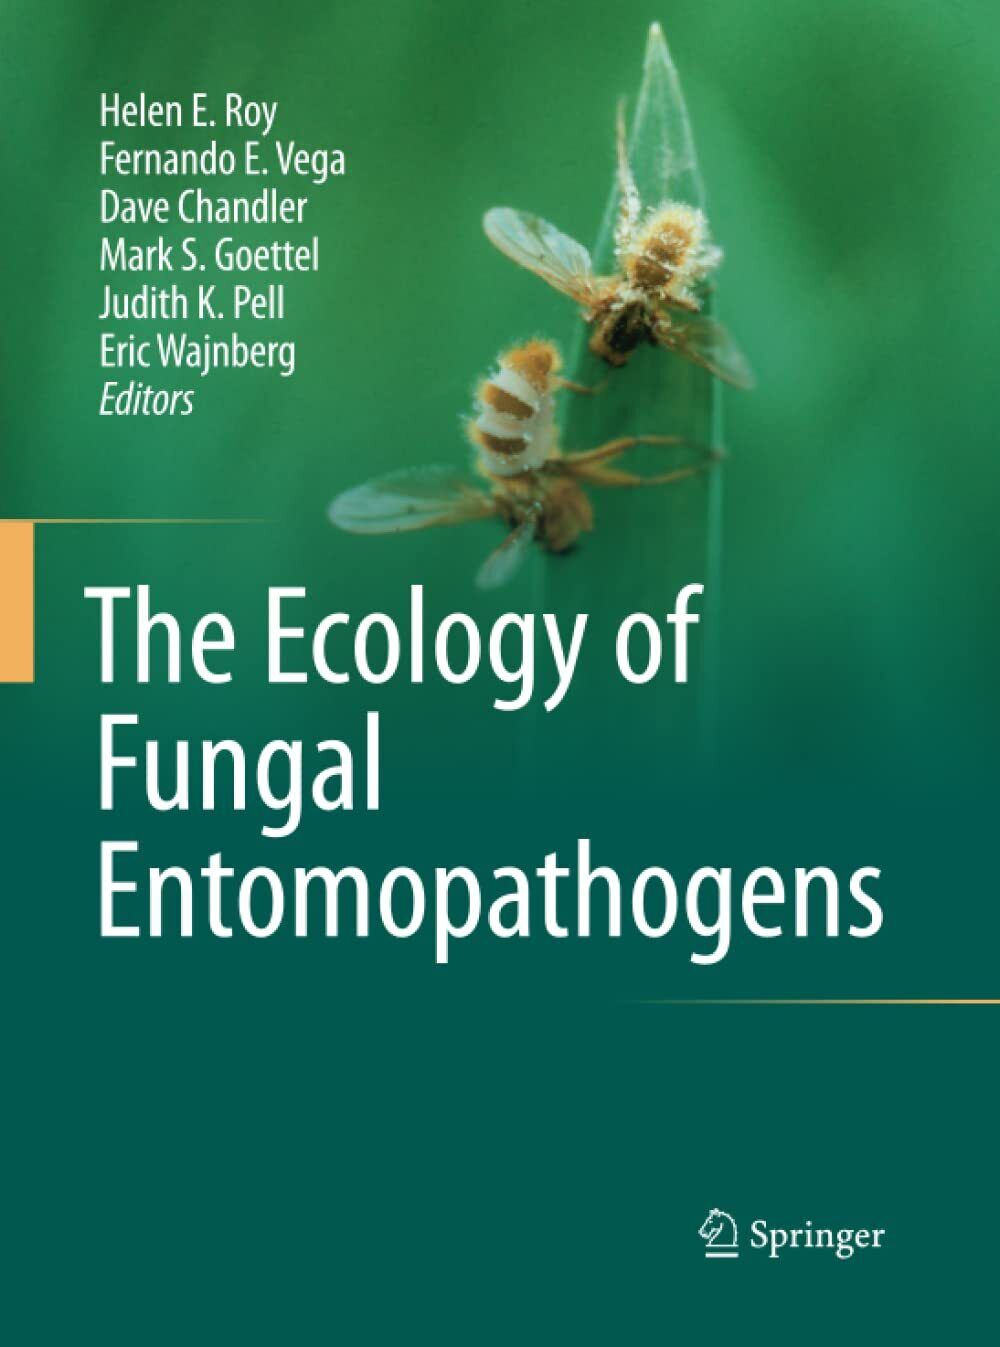 The Ecology of Fungal Entomopathogens - Helen E. Roy - Springer, 2014